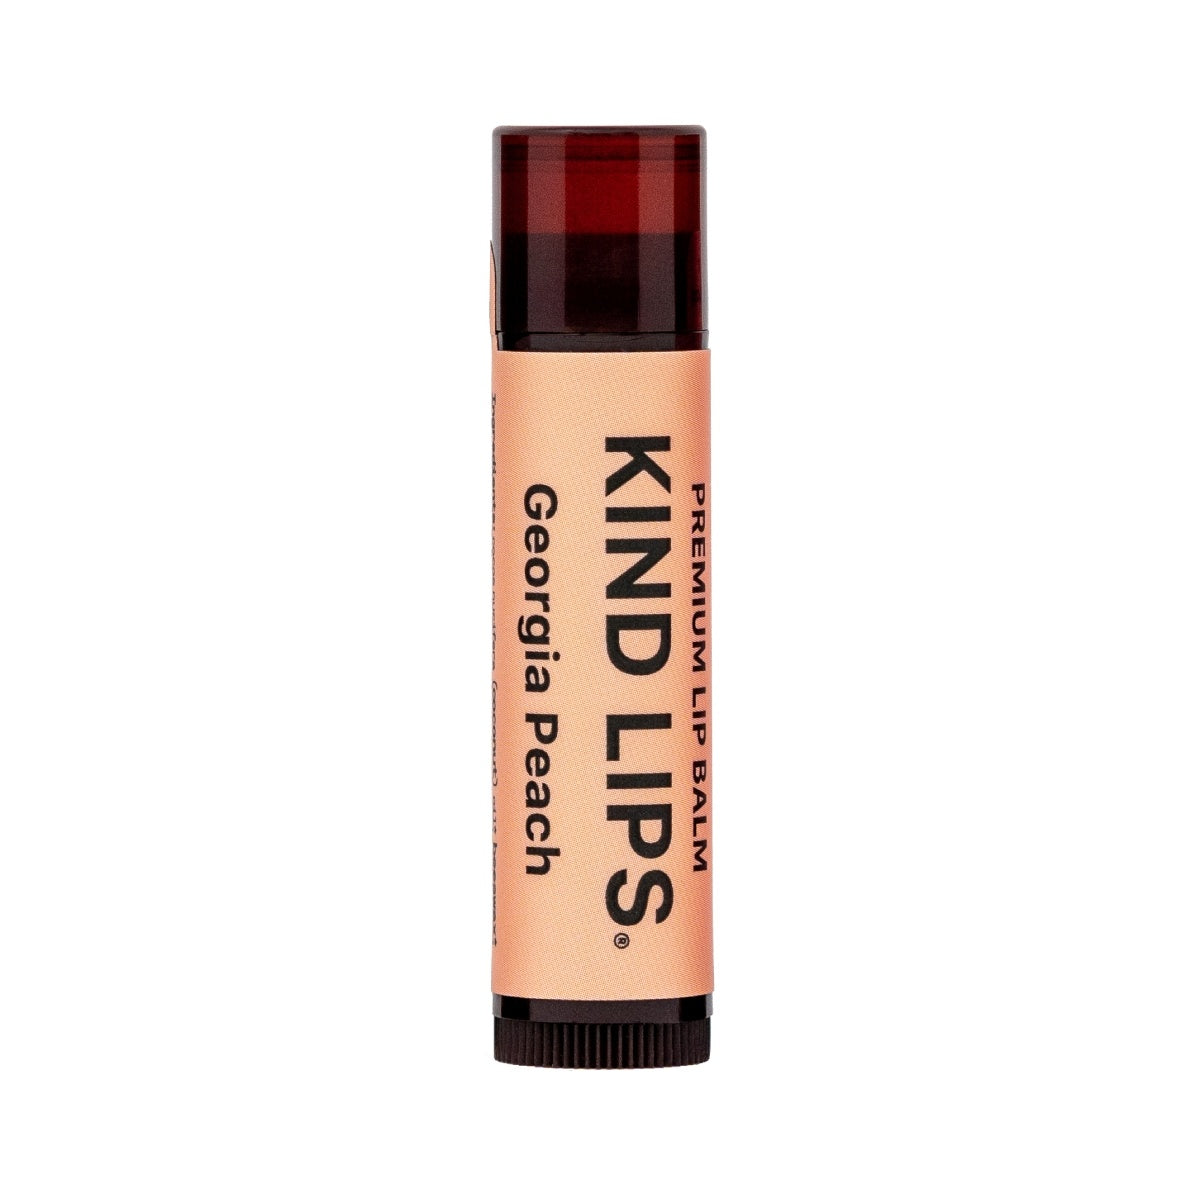 Kind Lips Chapstick